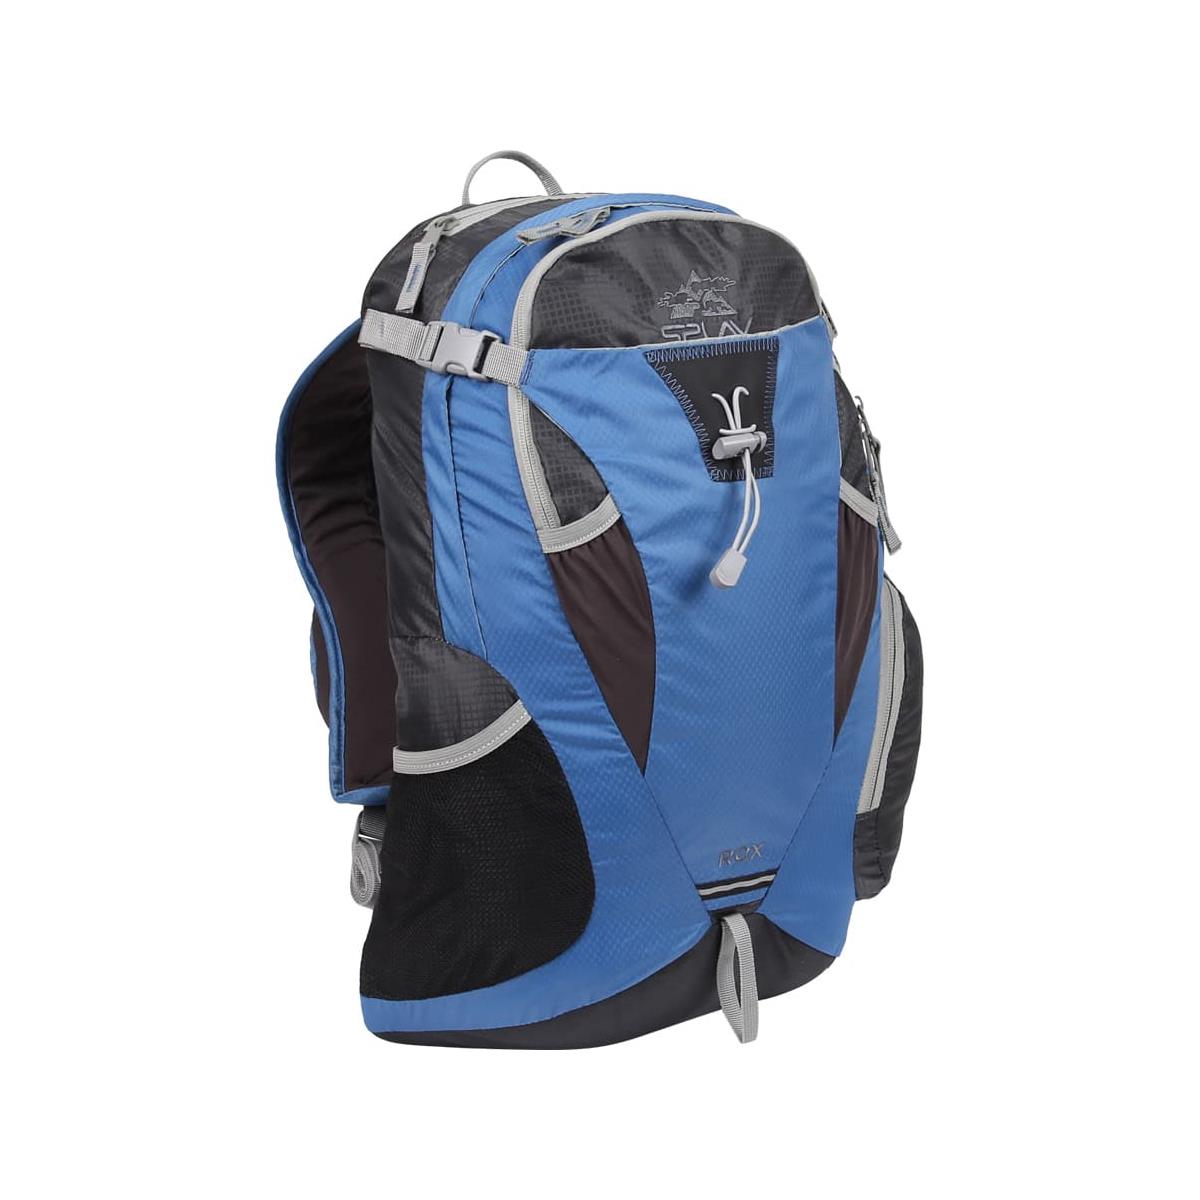 Рюкзак Rox синий СПЛАВ рюкзак на молнии голубой